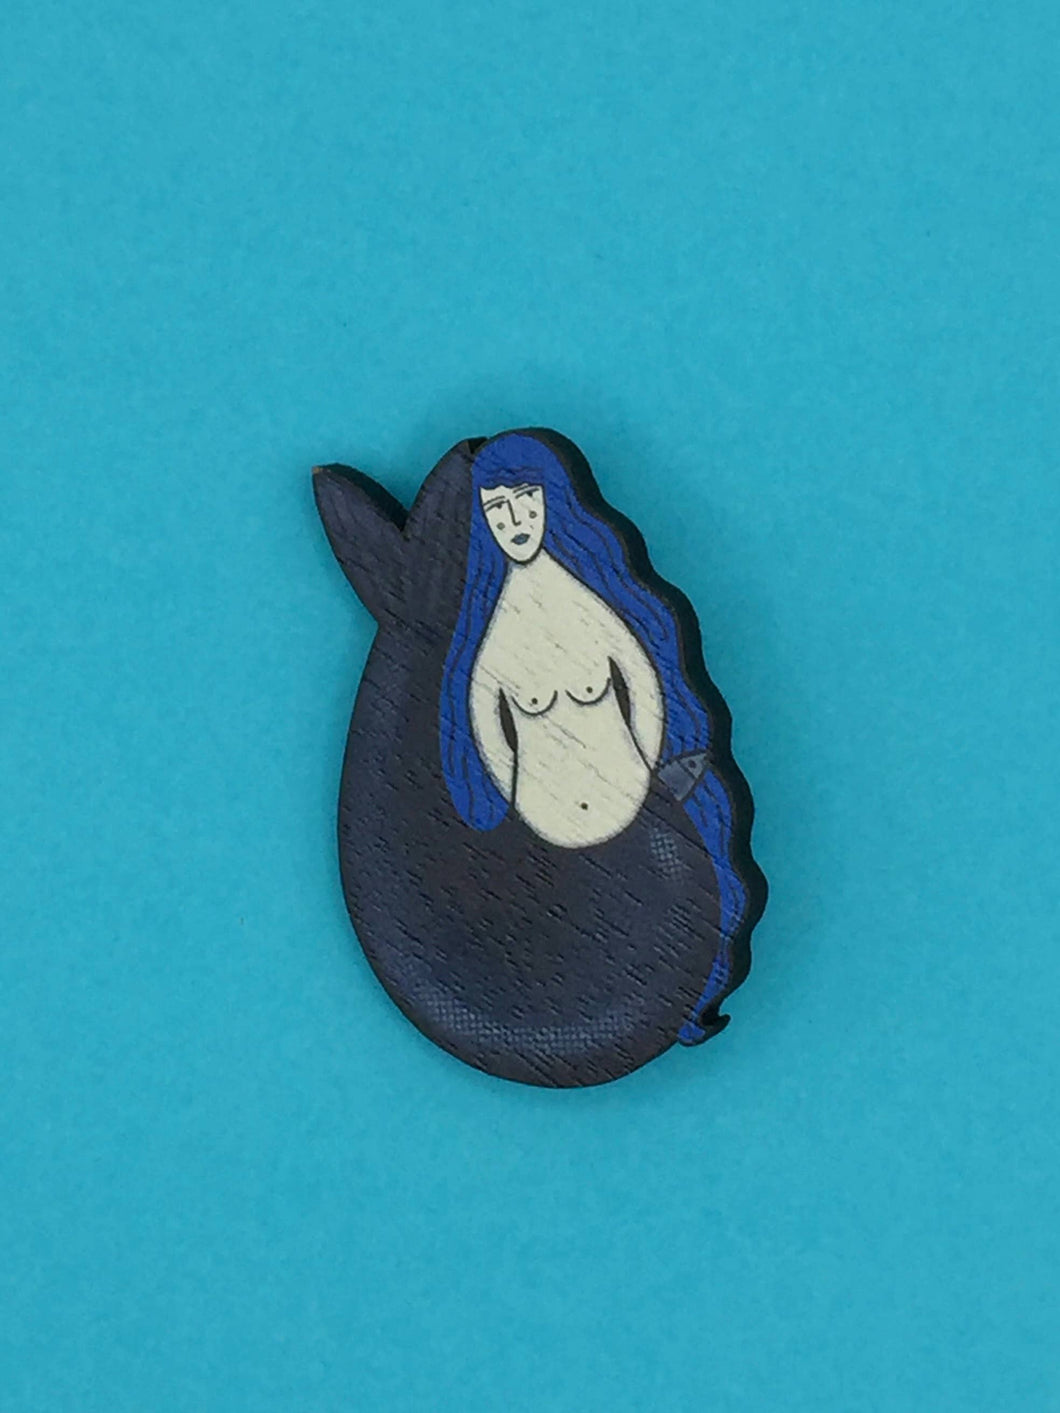 Wooden Mermaid Pin Brooch / Nautical Pin Badge